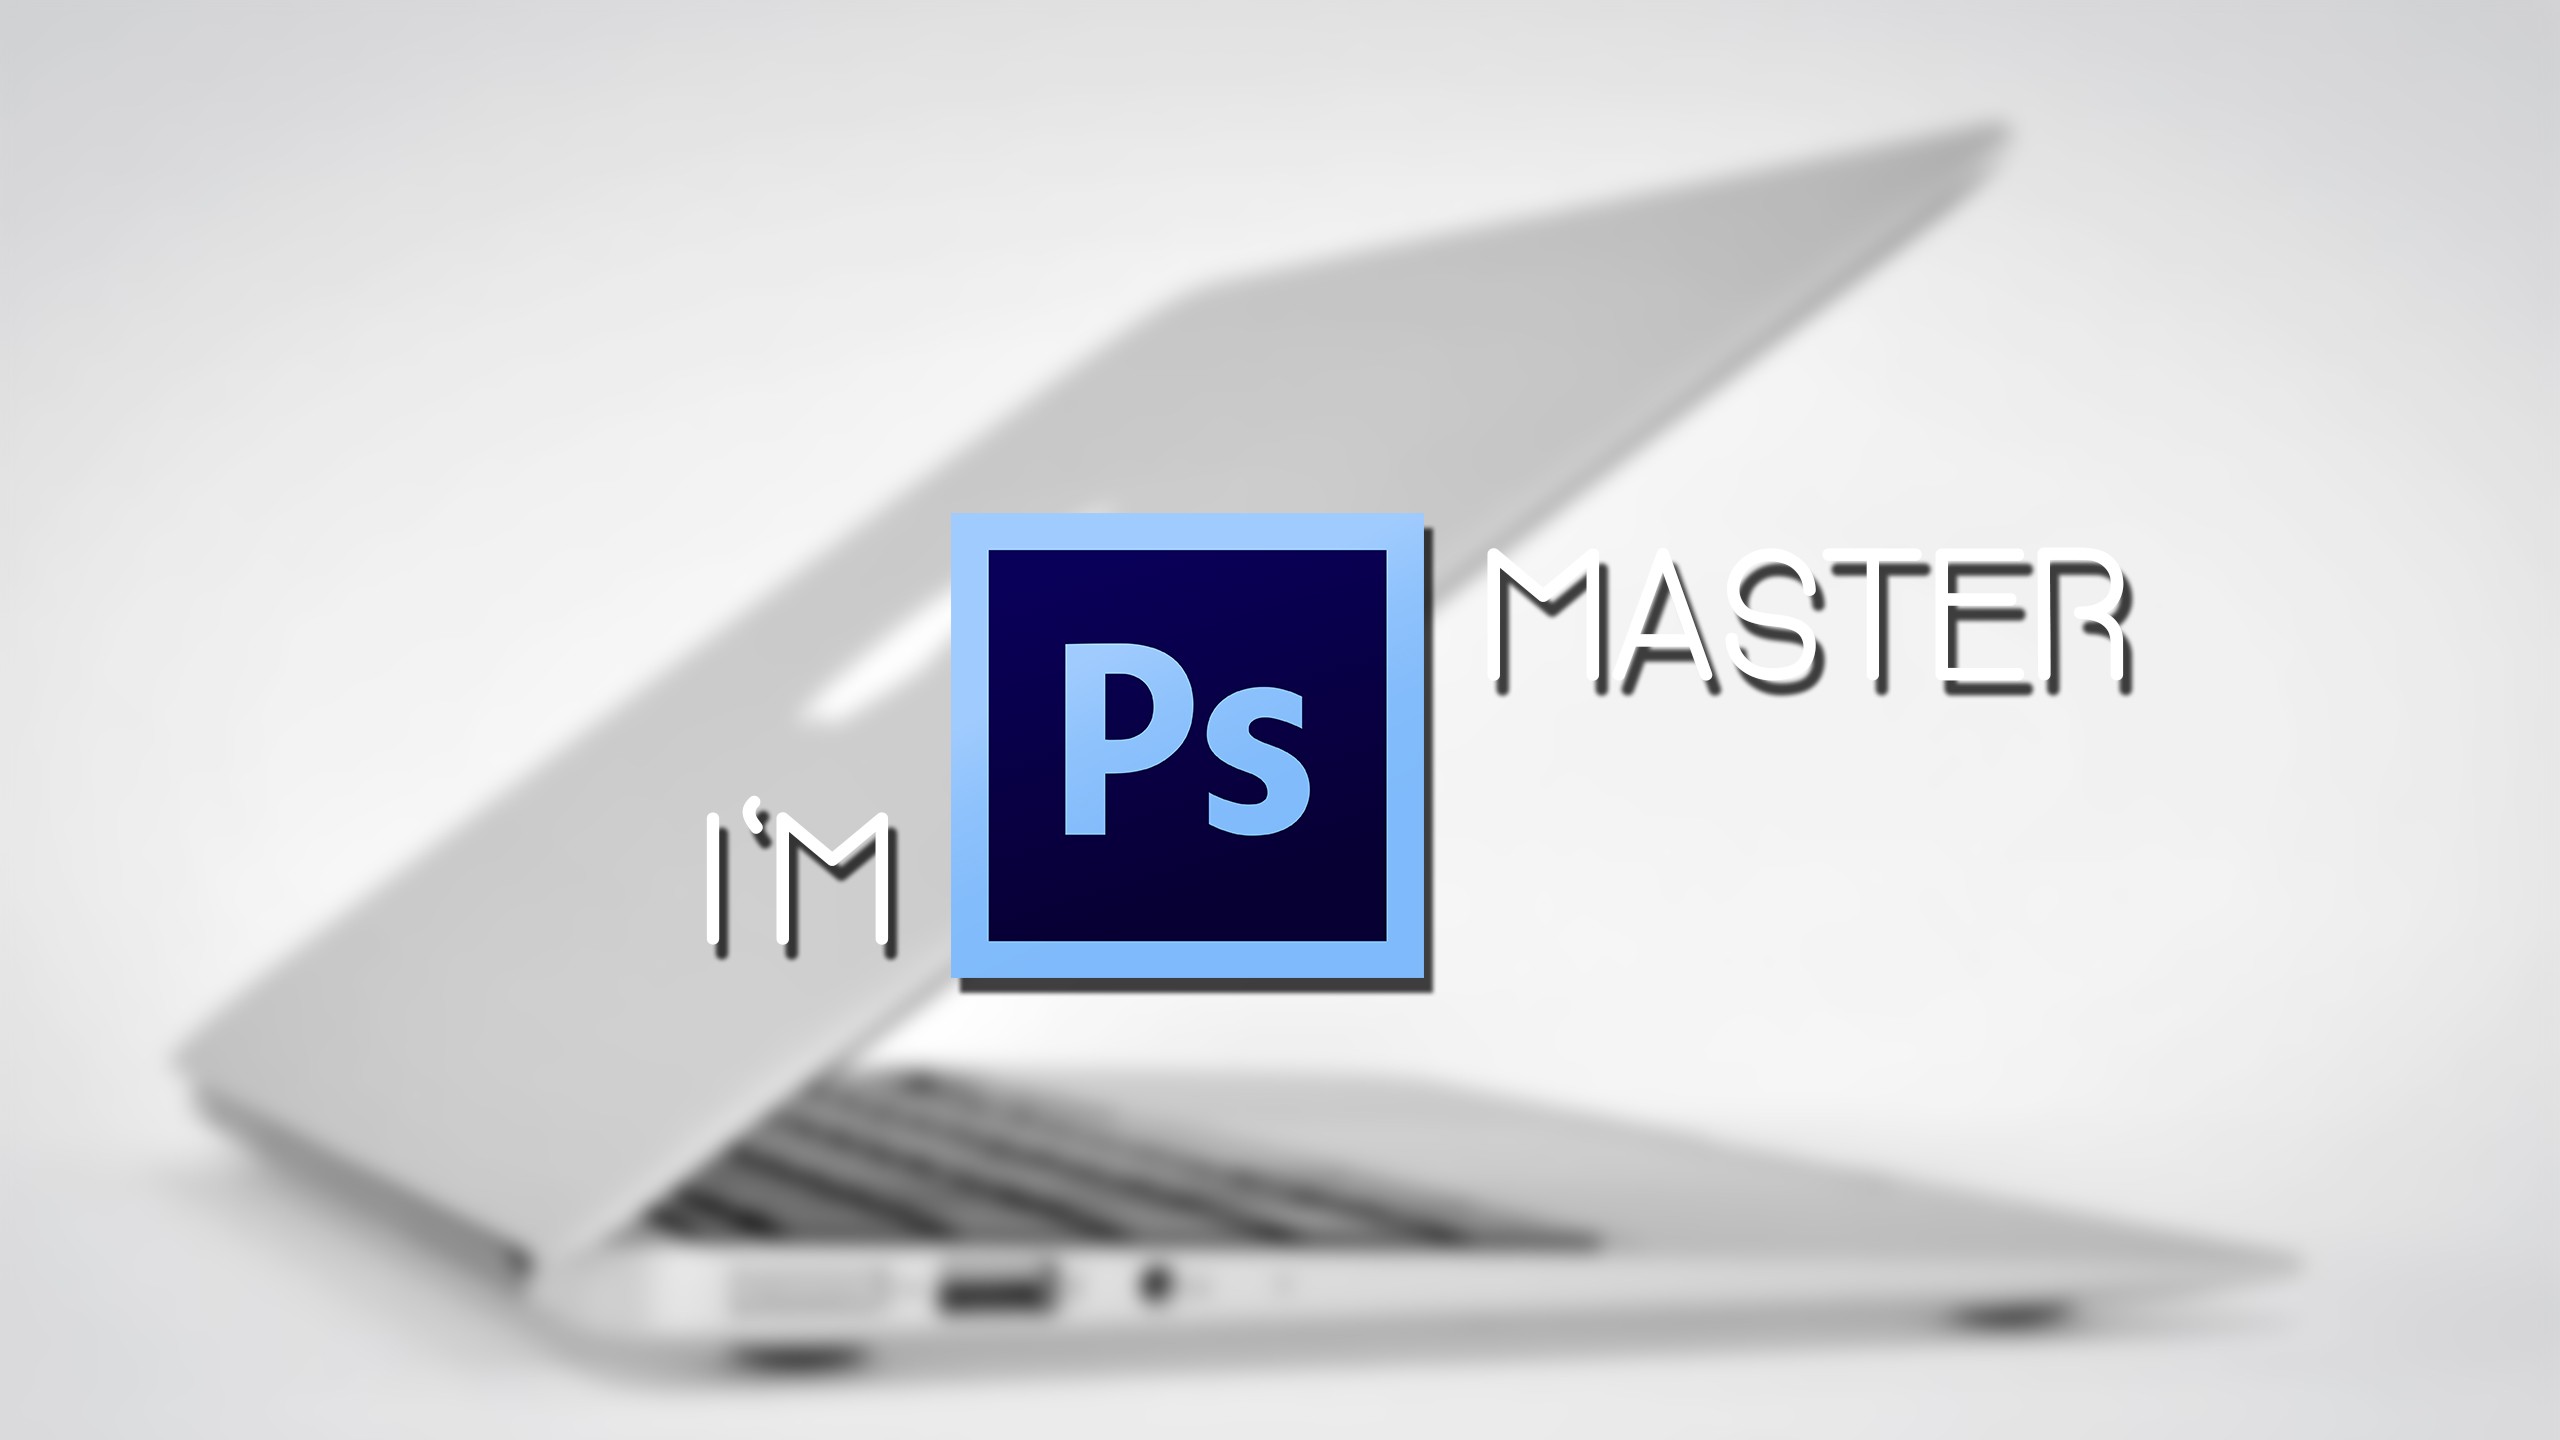 General 2560x1440 photoshopped blurred white laptop software digital art